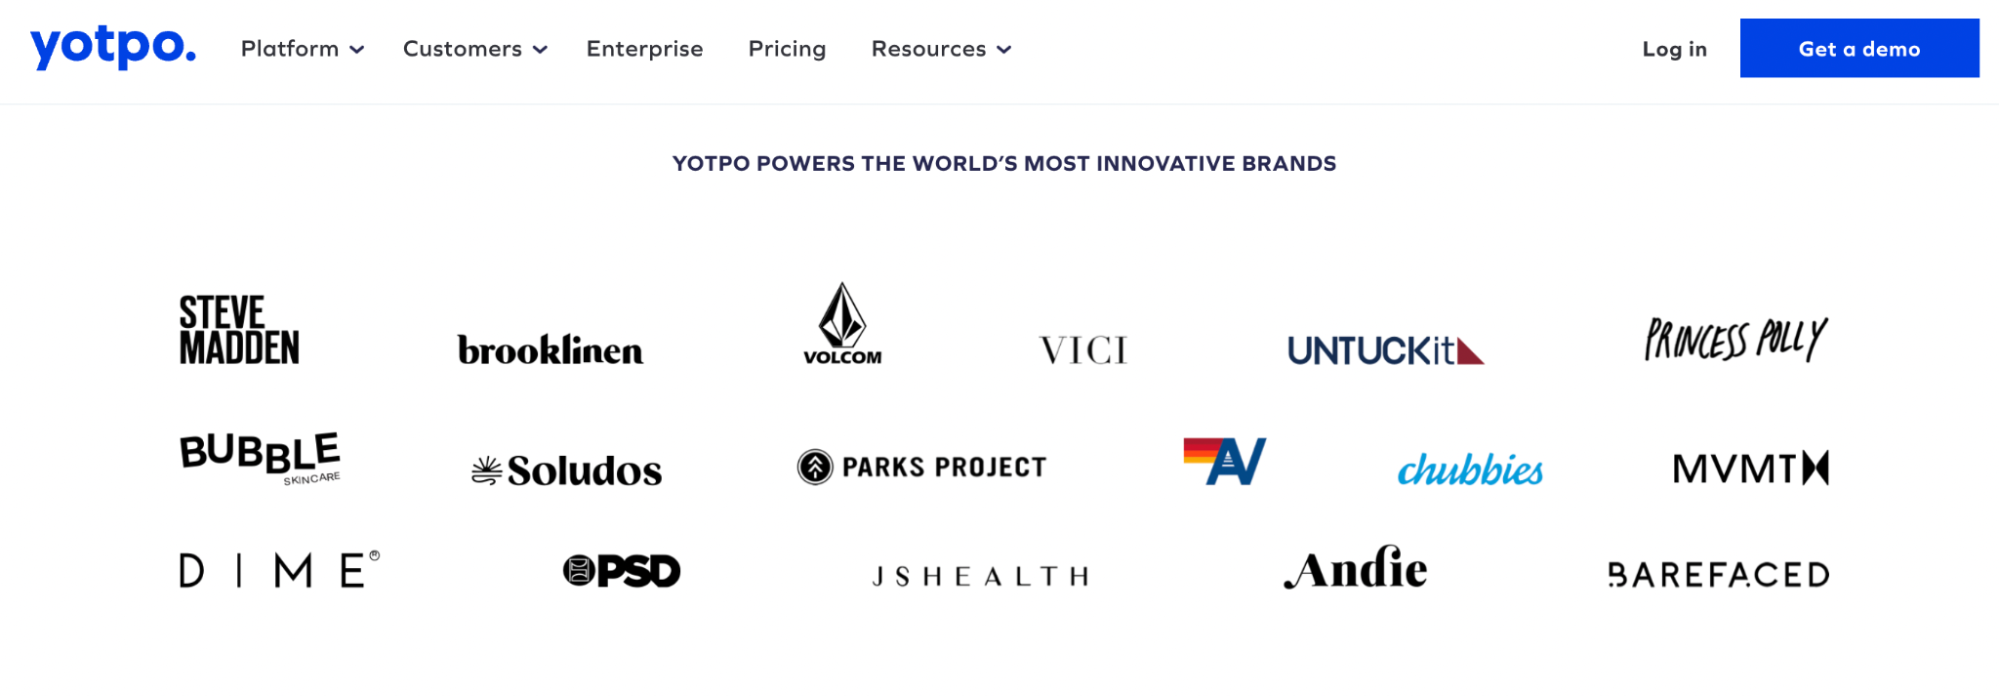 A screenshot of Yotpo's landing page with customer logos